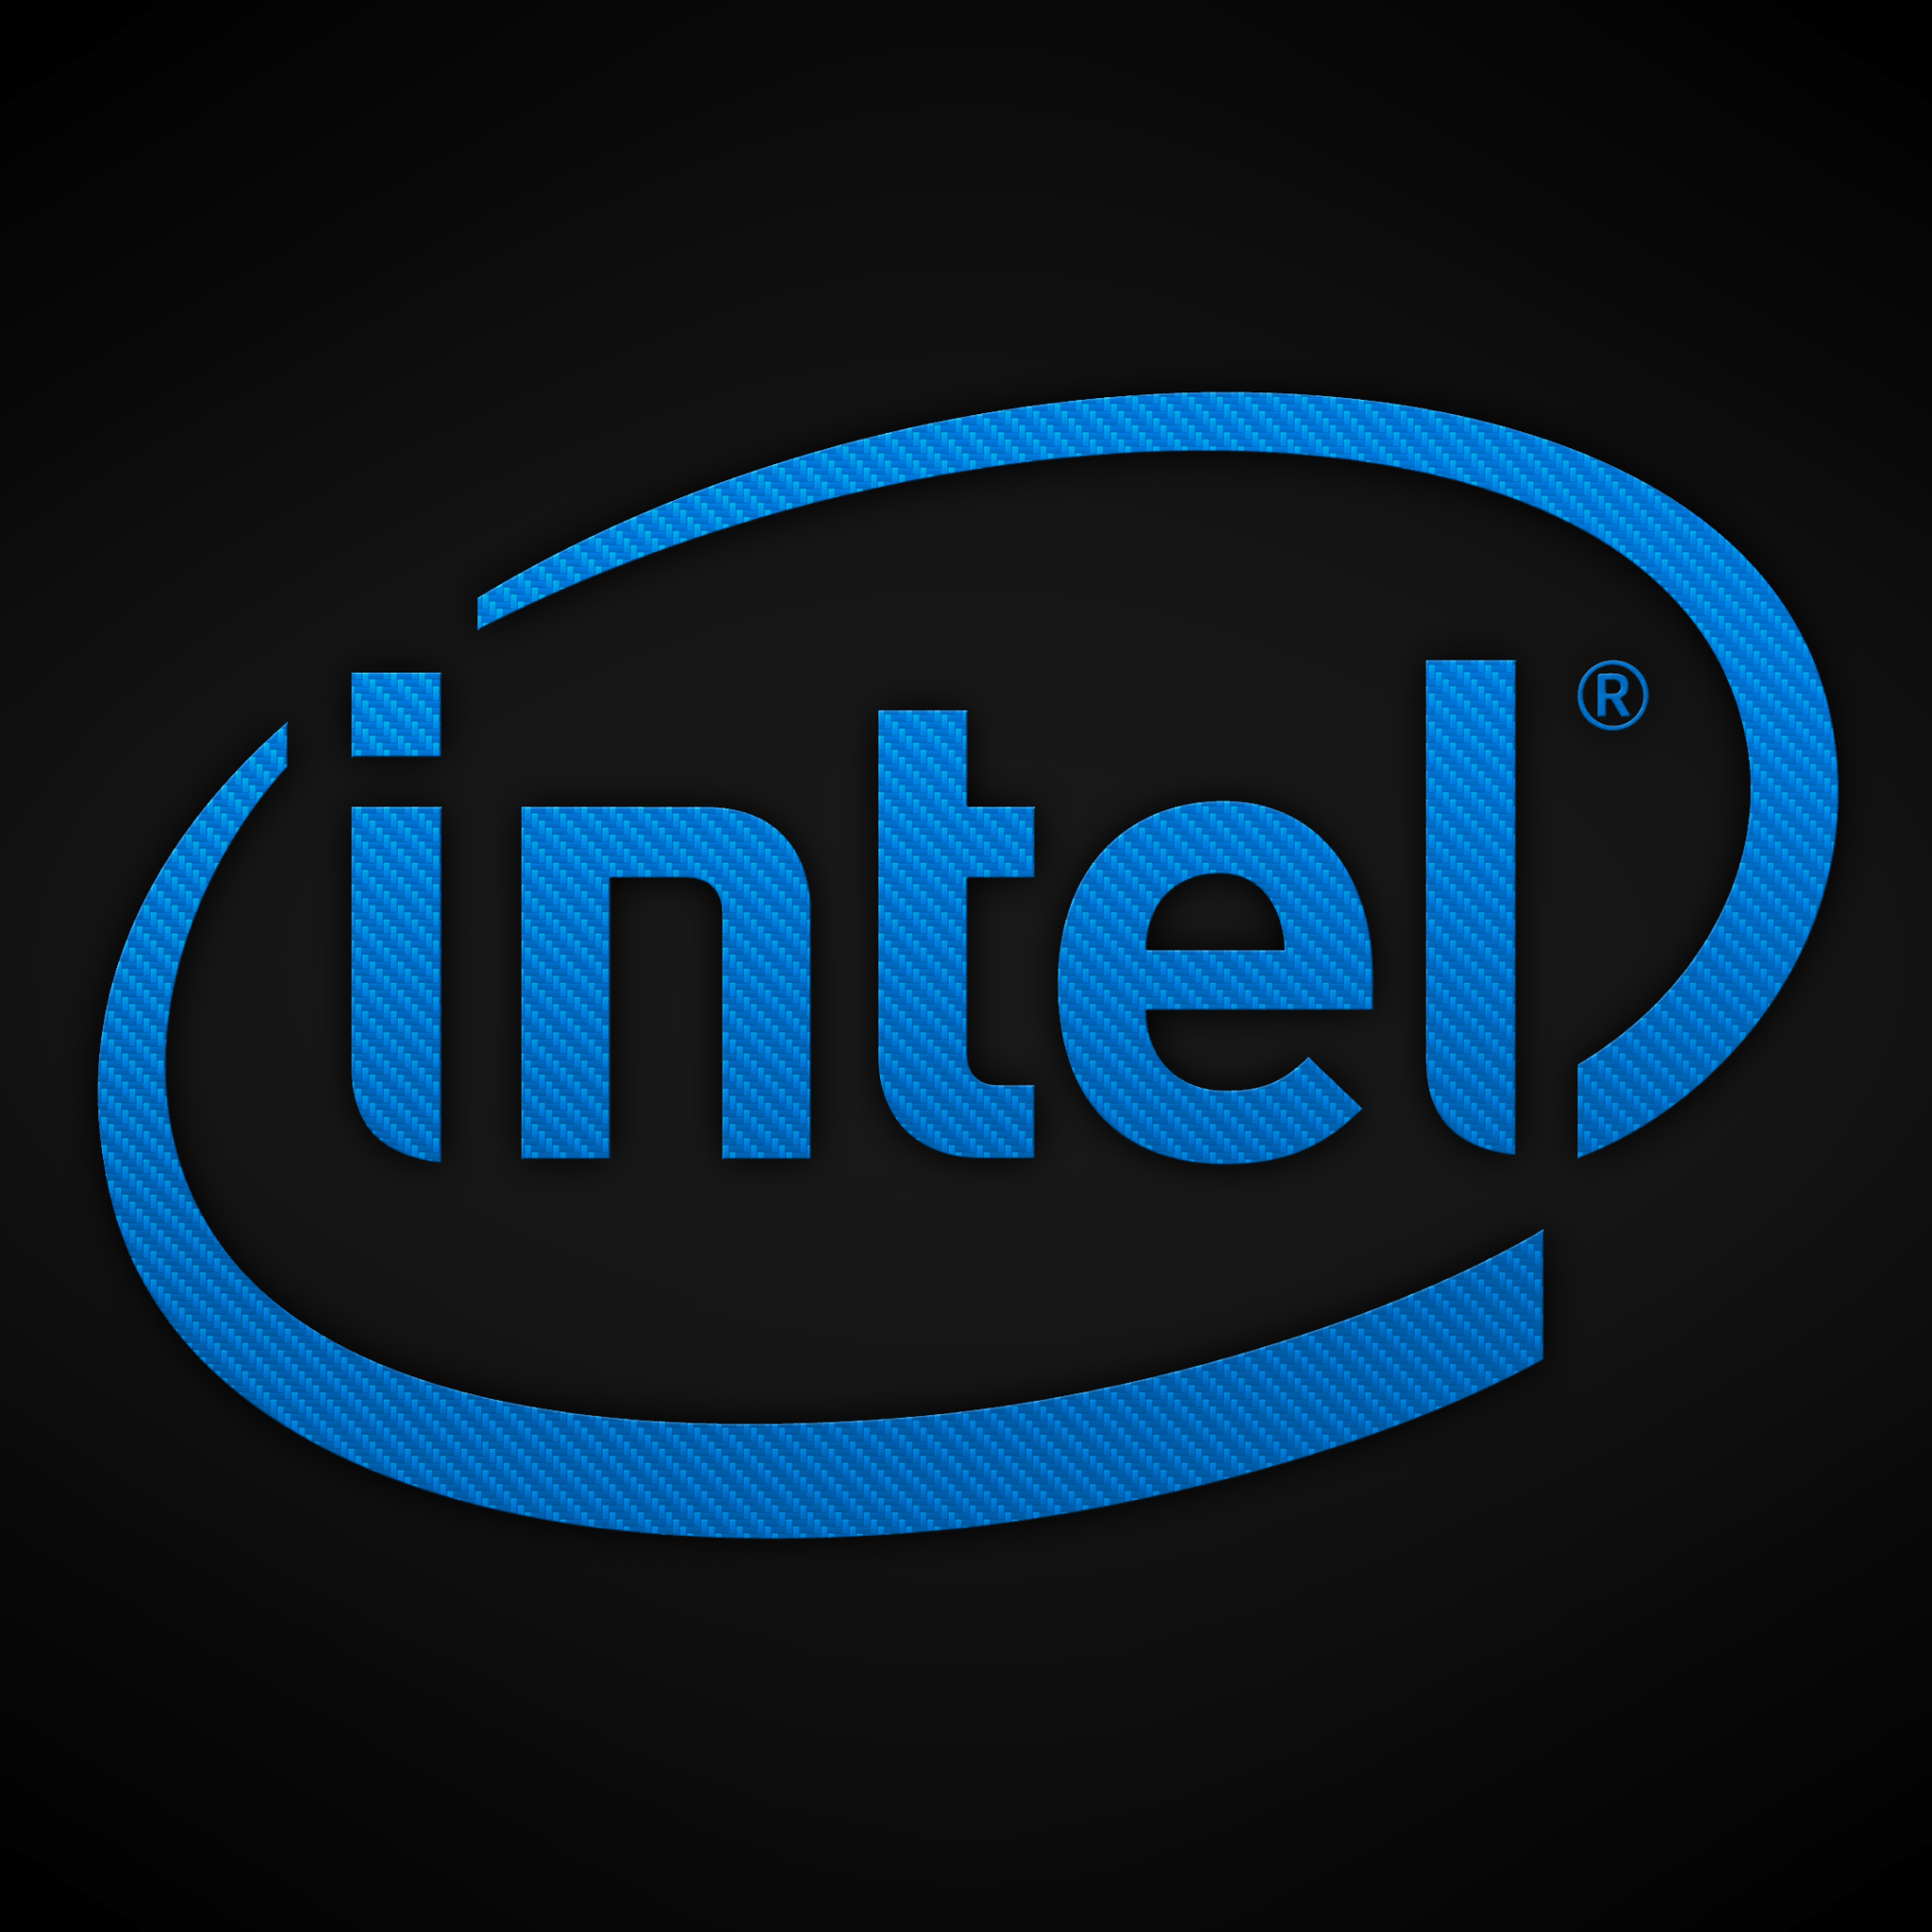 Intel Company Logo - High Definition Wallpaper Of Intel's Company Logo | PaperPull